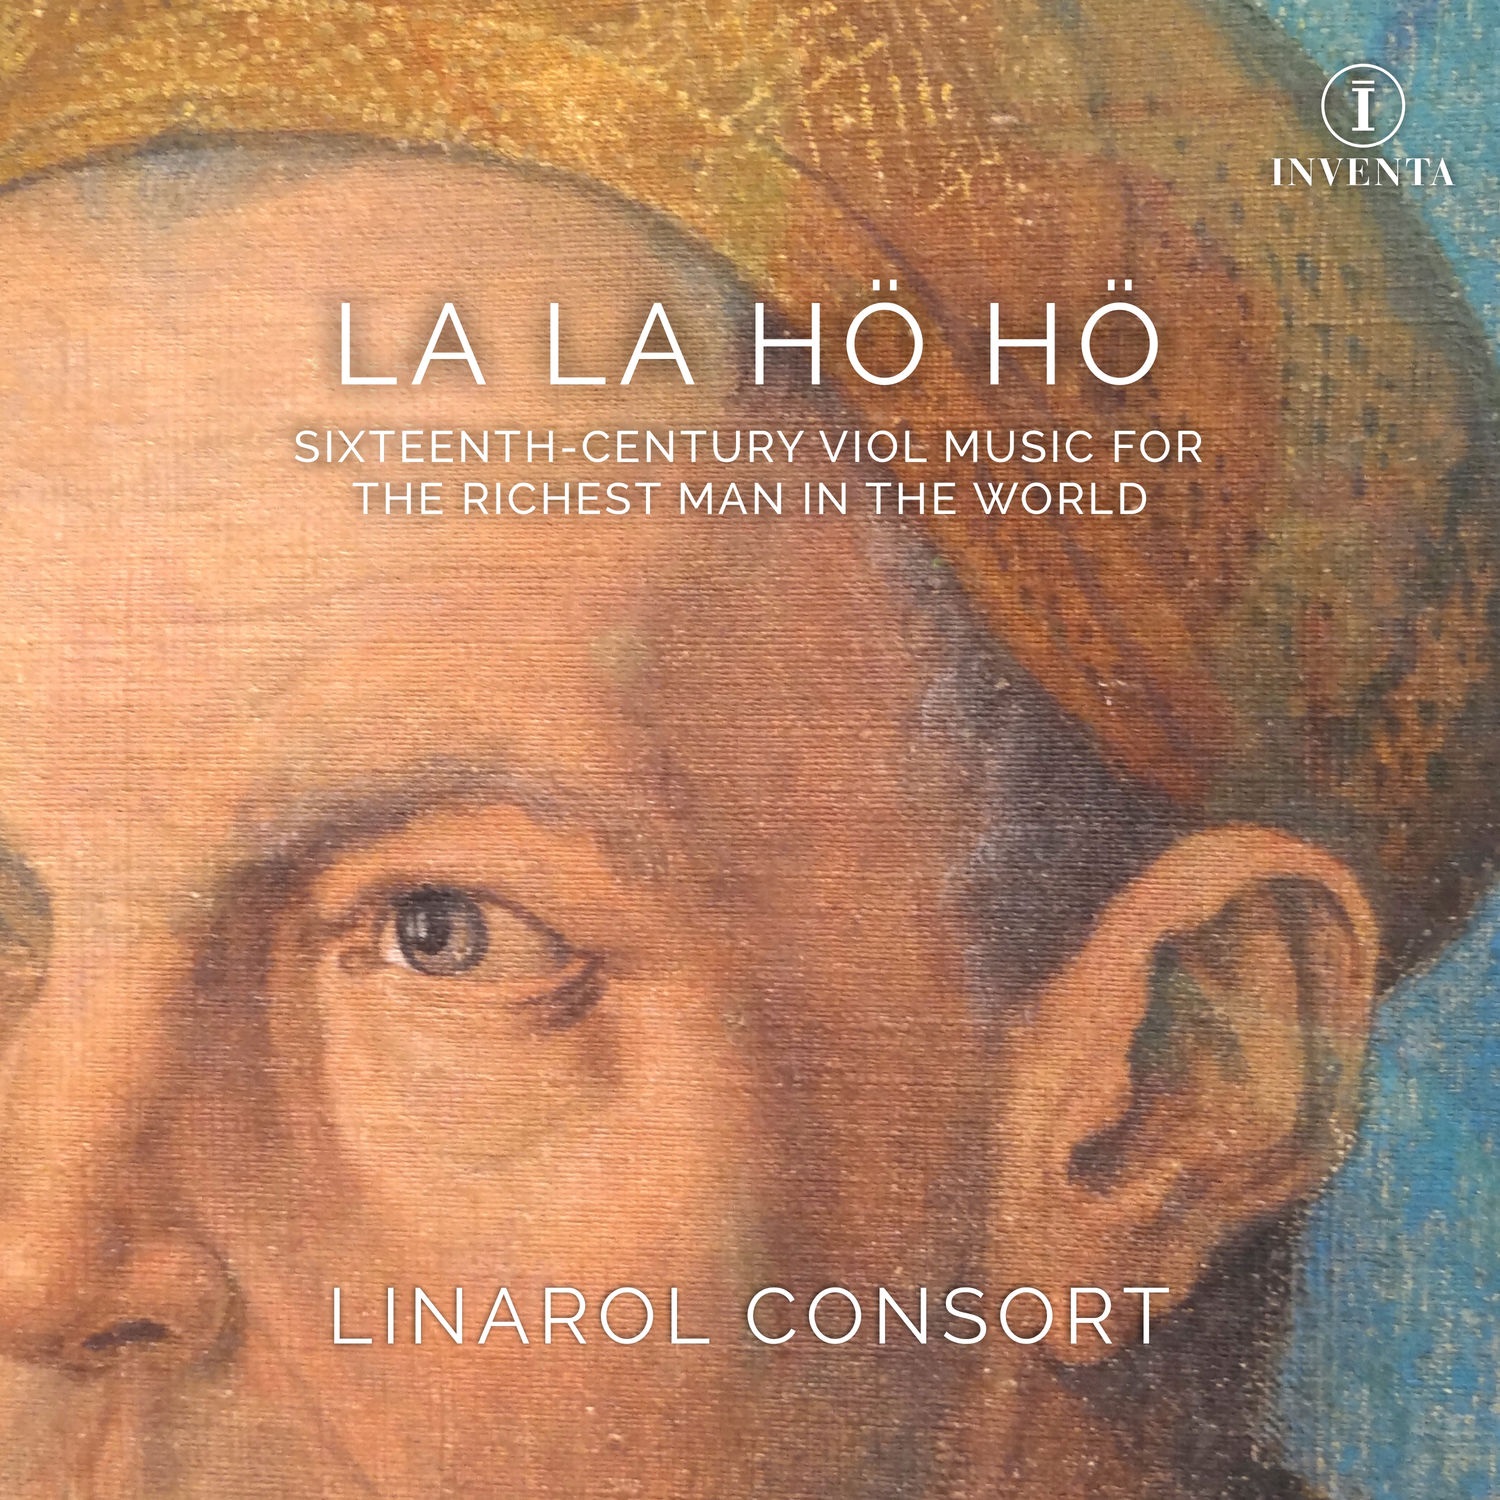 The Linarol Consort - La la ho ho: Sixteenth-Century Viol Music for the Richest Man in the World (2021) [FLAC 24bit/96kHz]